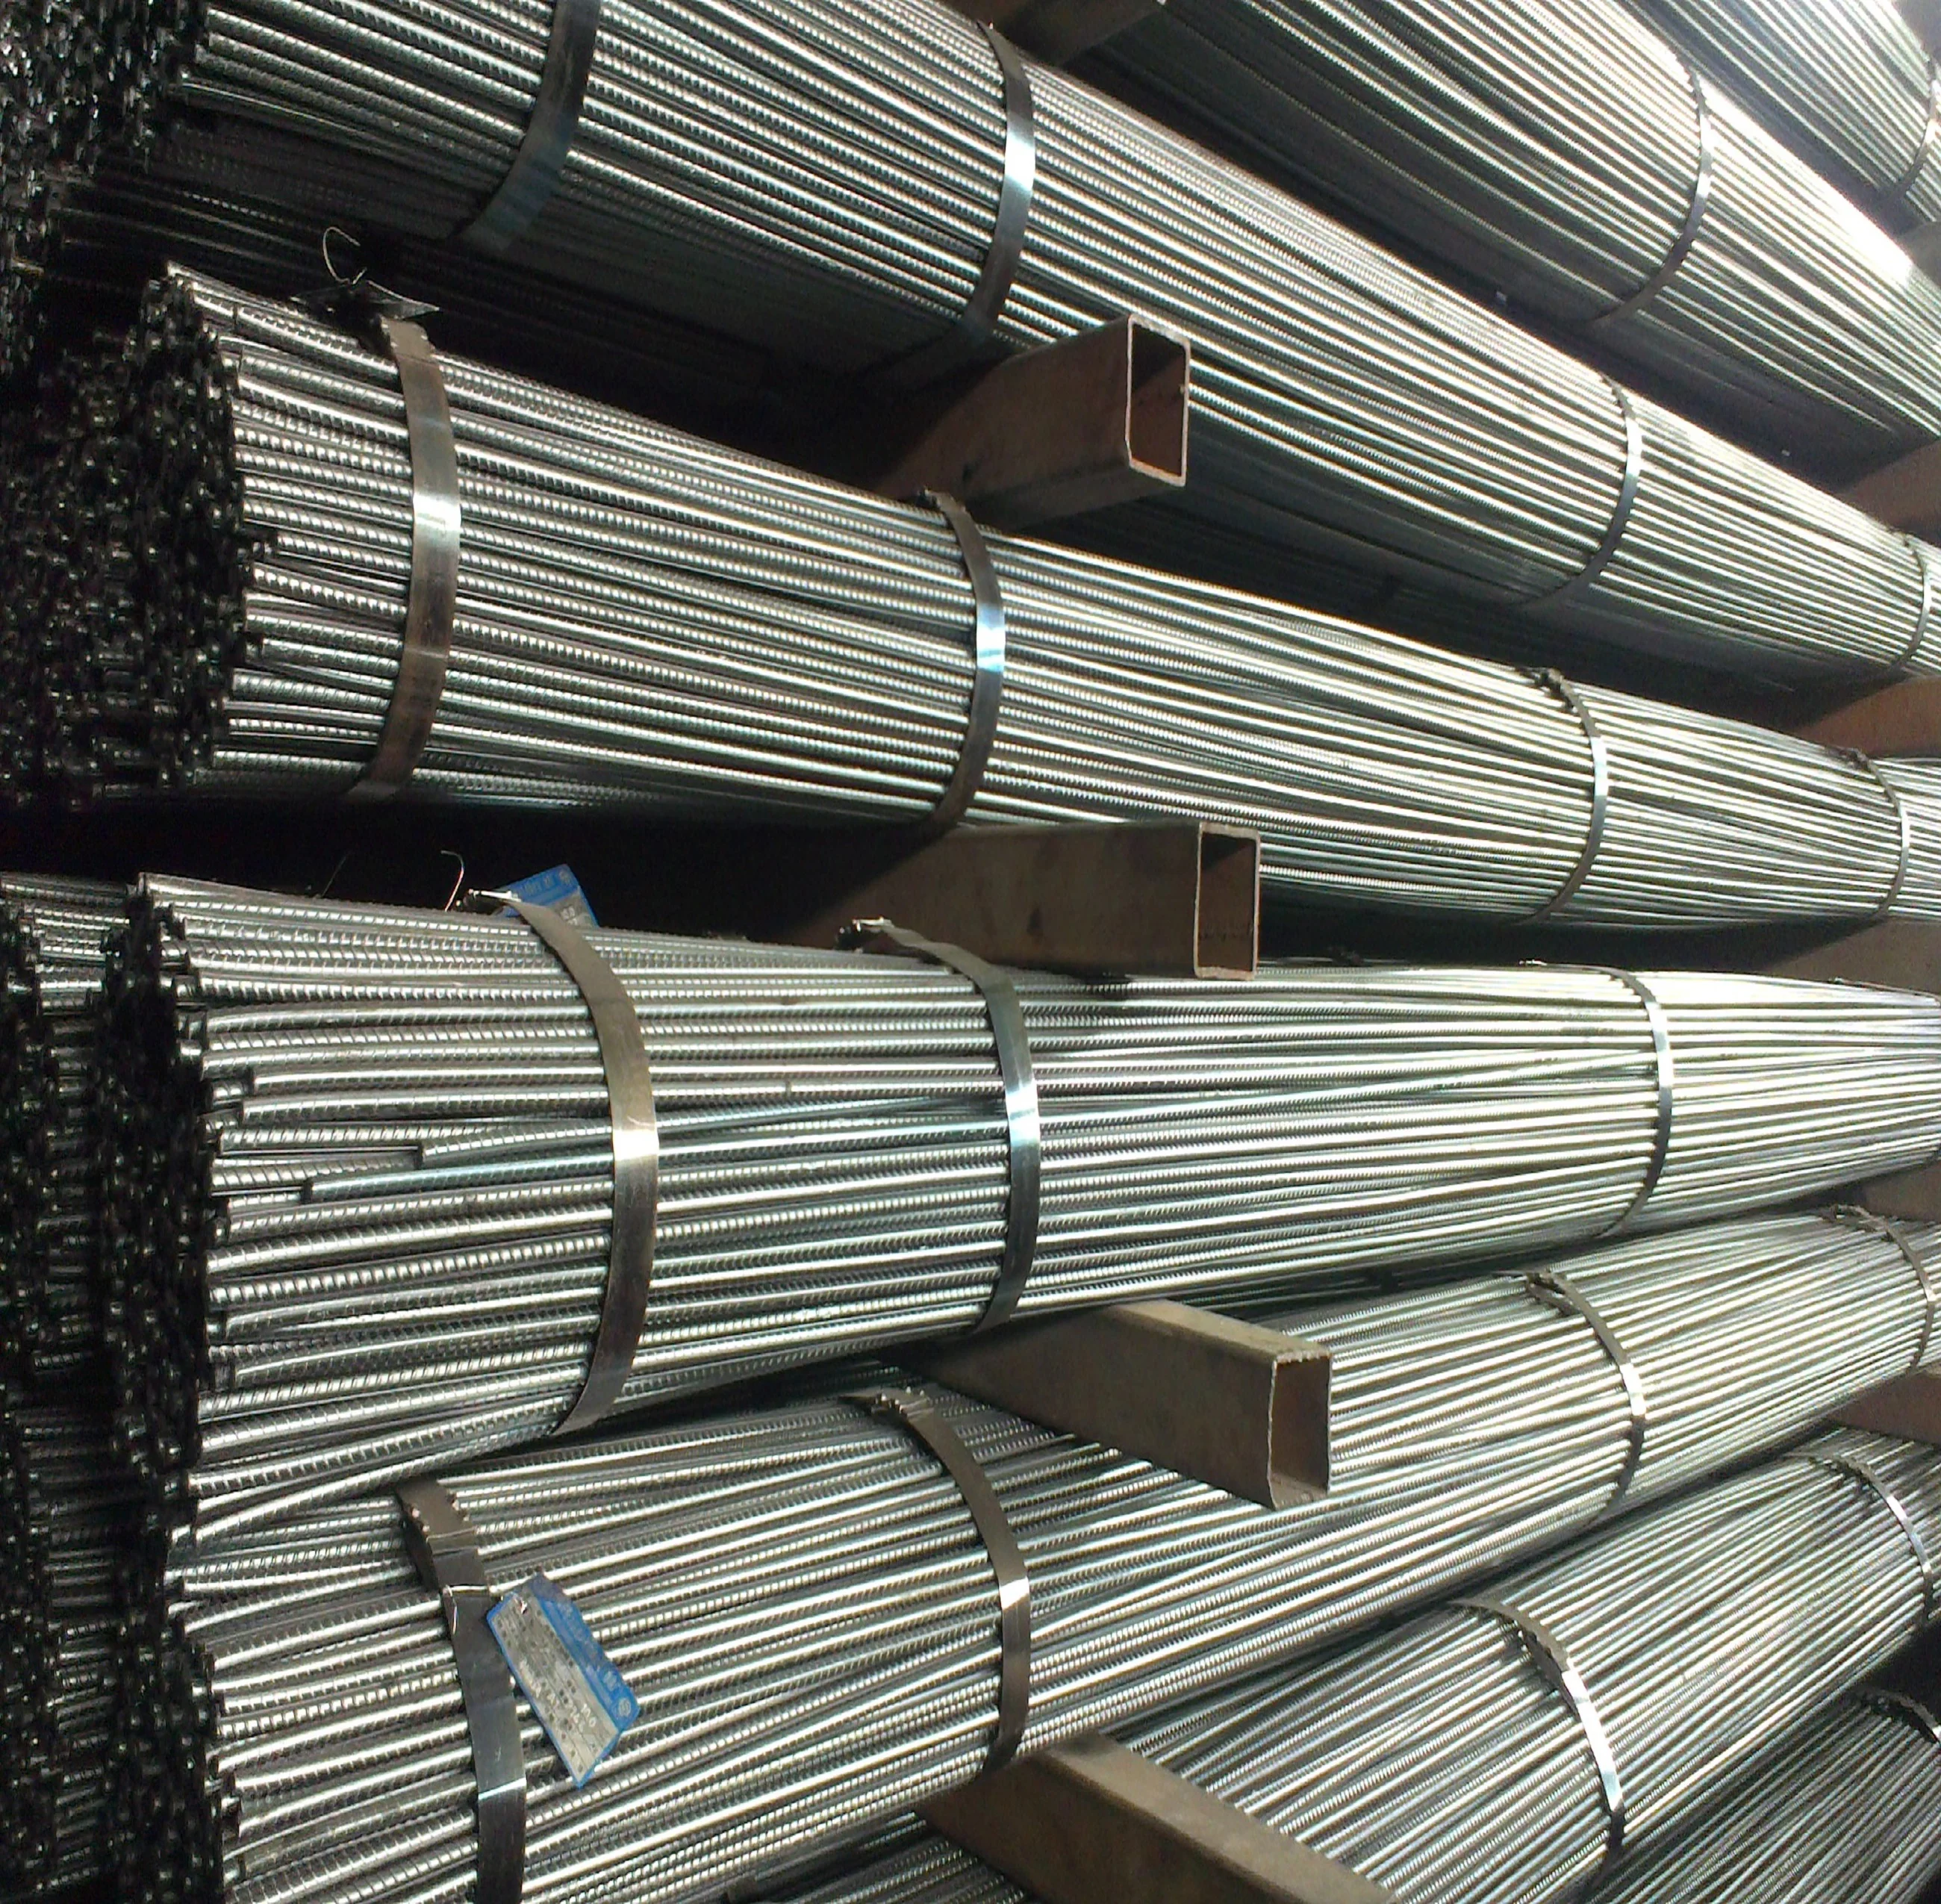 20 Length Deal Rebar 12mm x 6m Concrete Reinforcing Steel Bar / Rod 